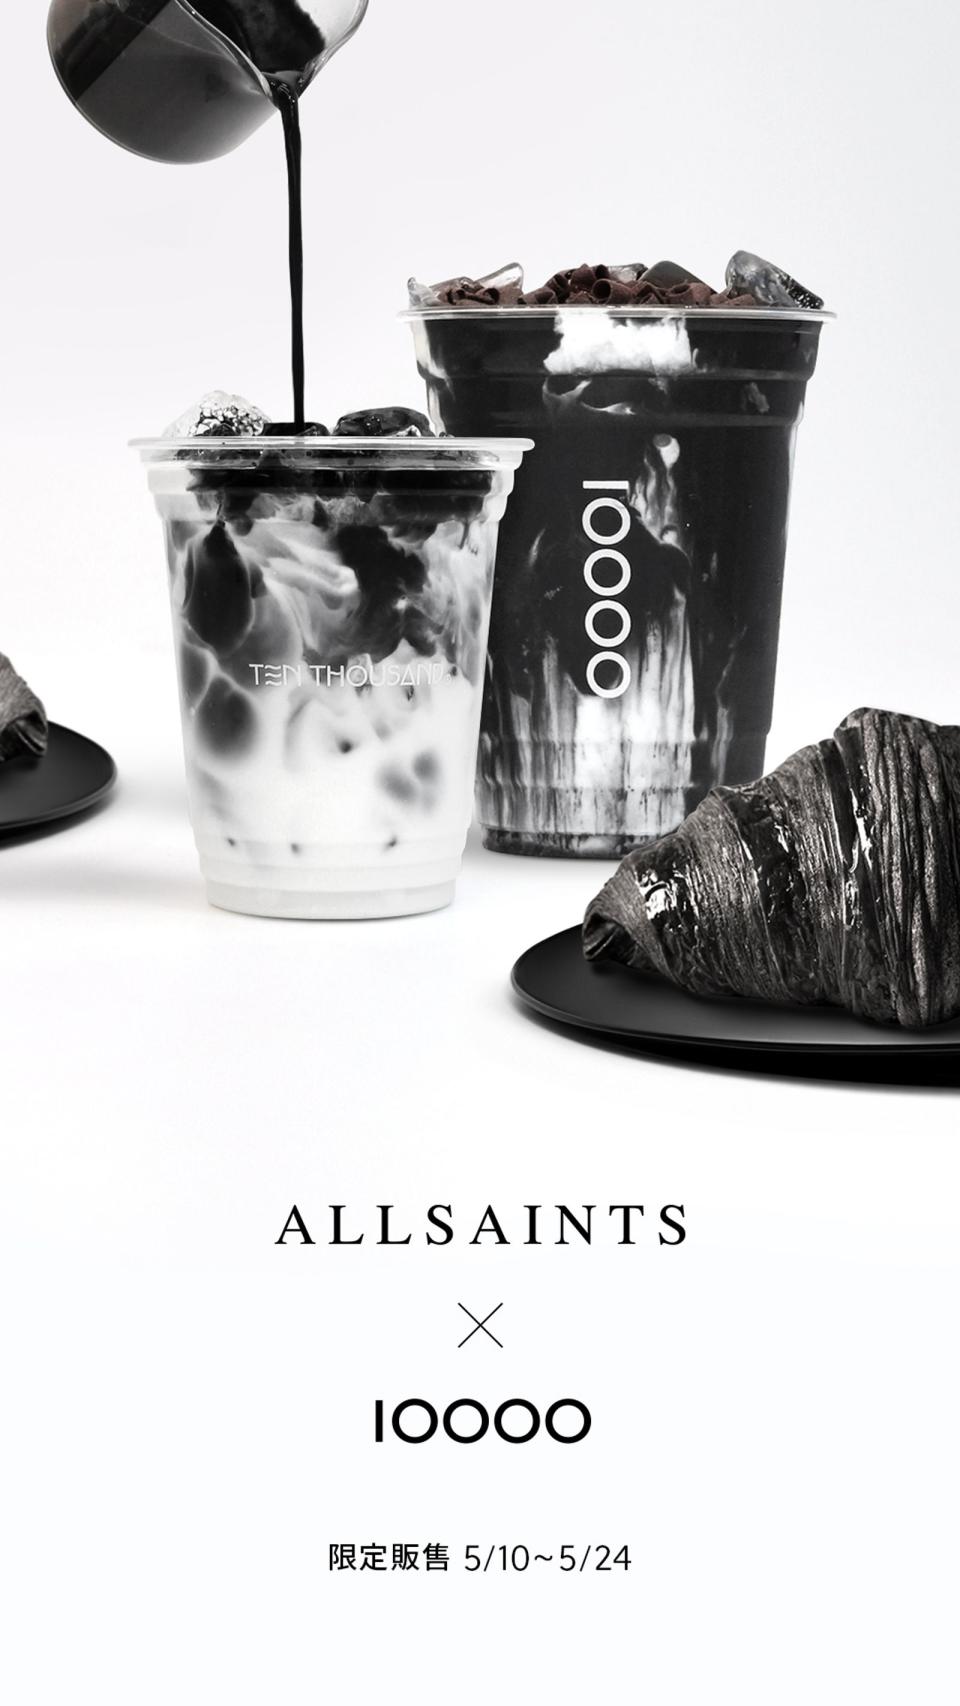 ALLSAINTS x TEN THOUSAND COFFEE聯名套餐推出醇濃黑咖啡拿鐵、醇濃巧克力拿鐵及黑可頌三款特色餐點。（ALLSAINTS提供）